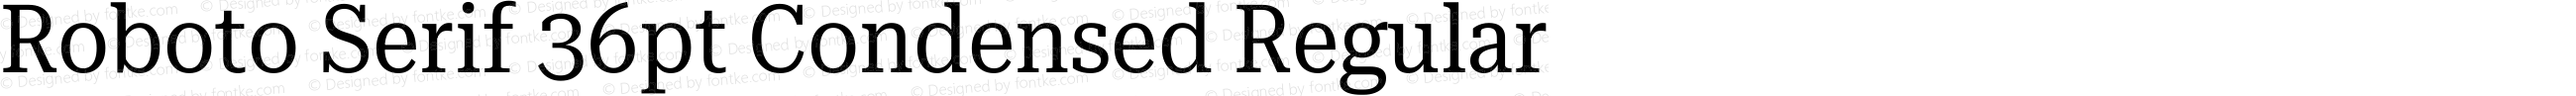 Roboto Serif 36pt Condensed Regular